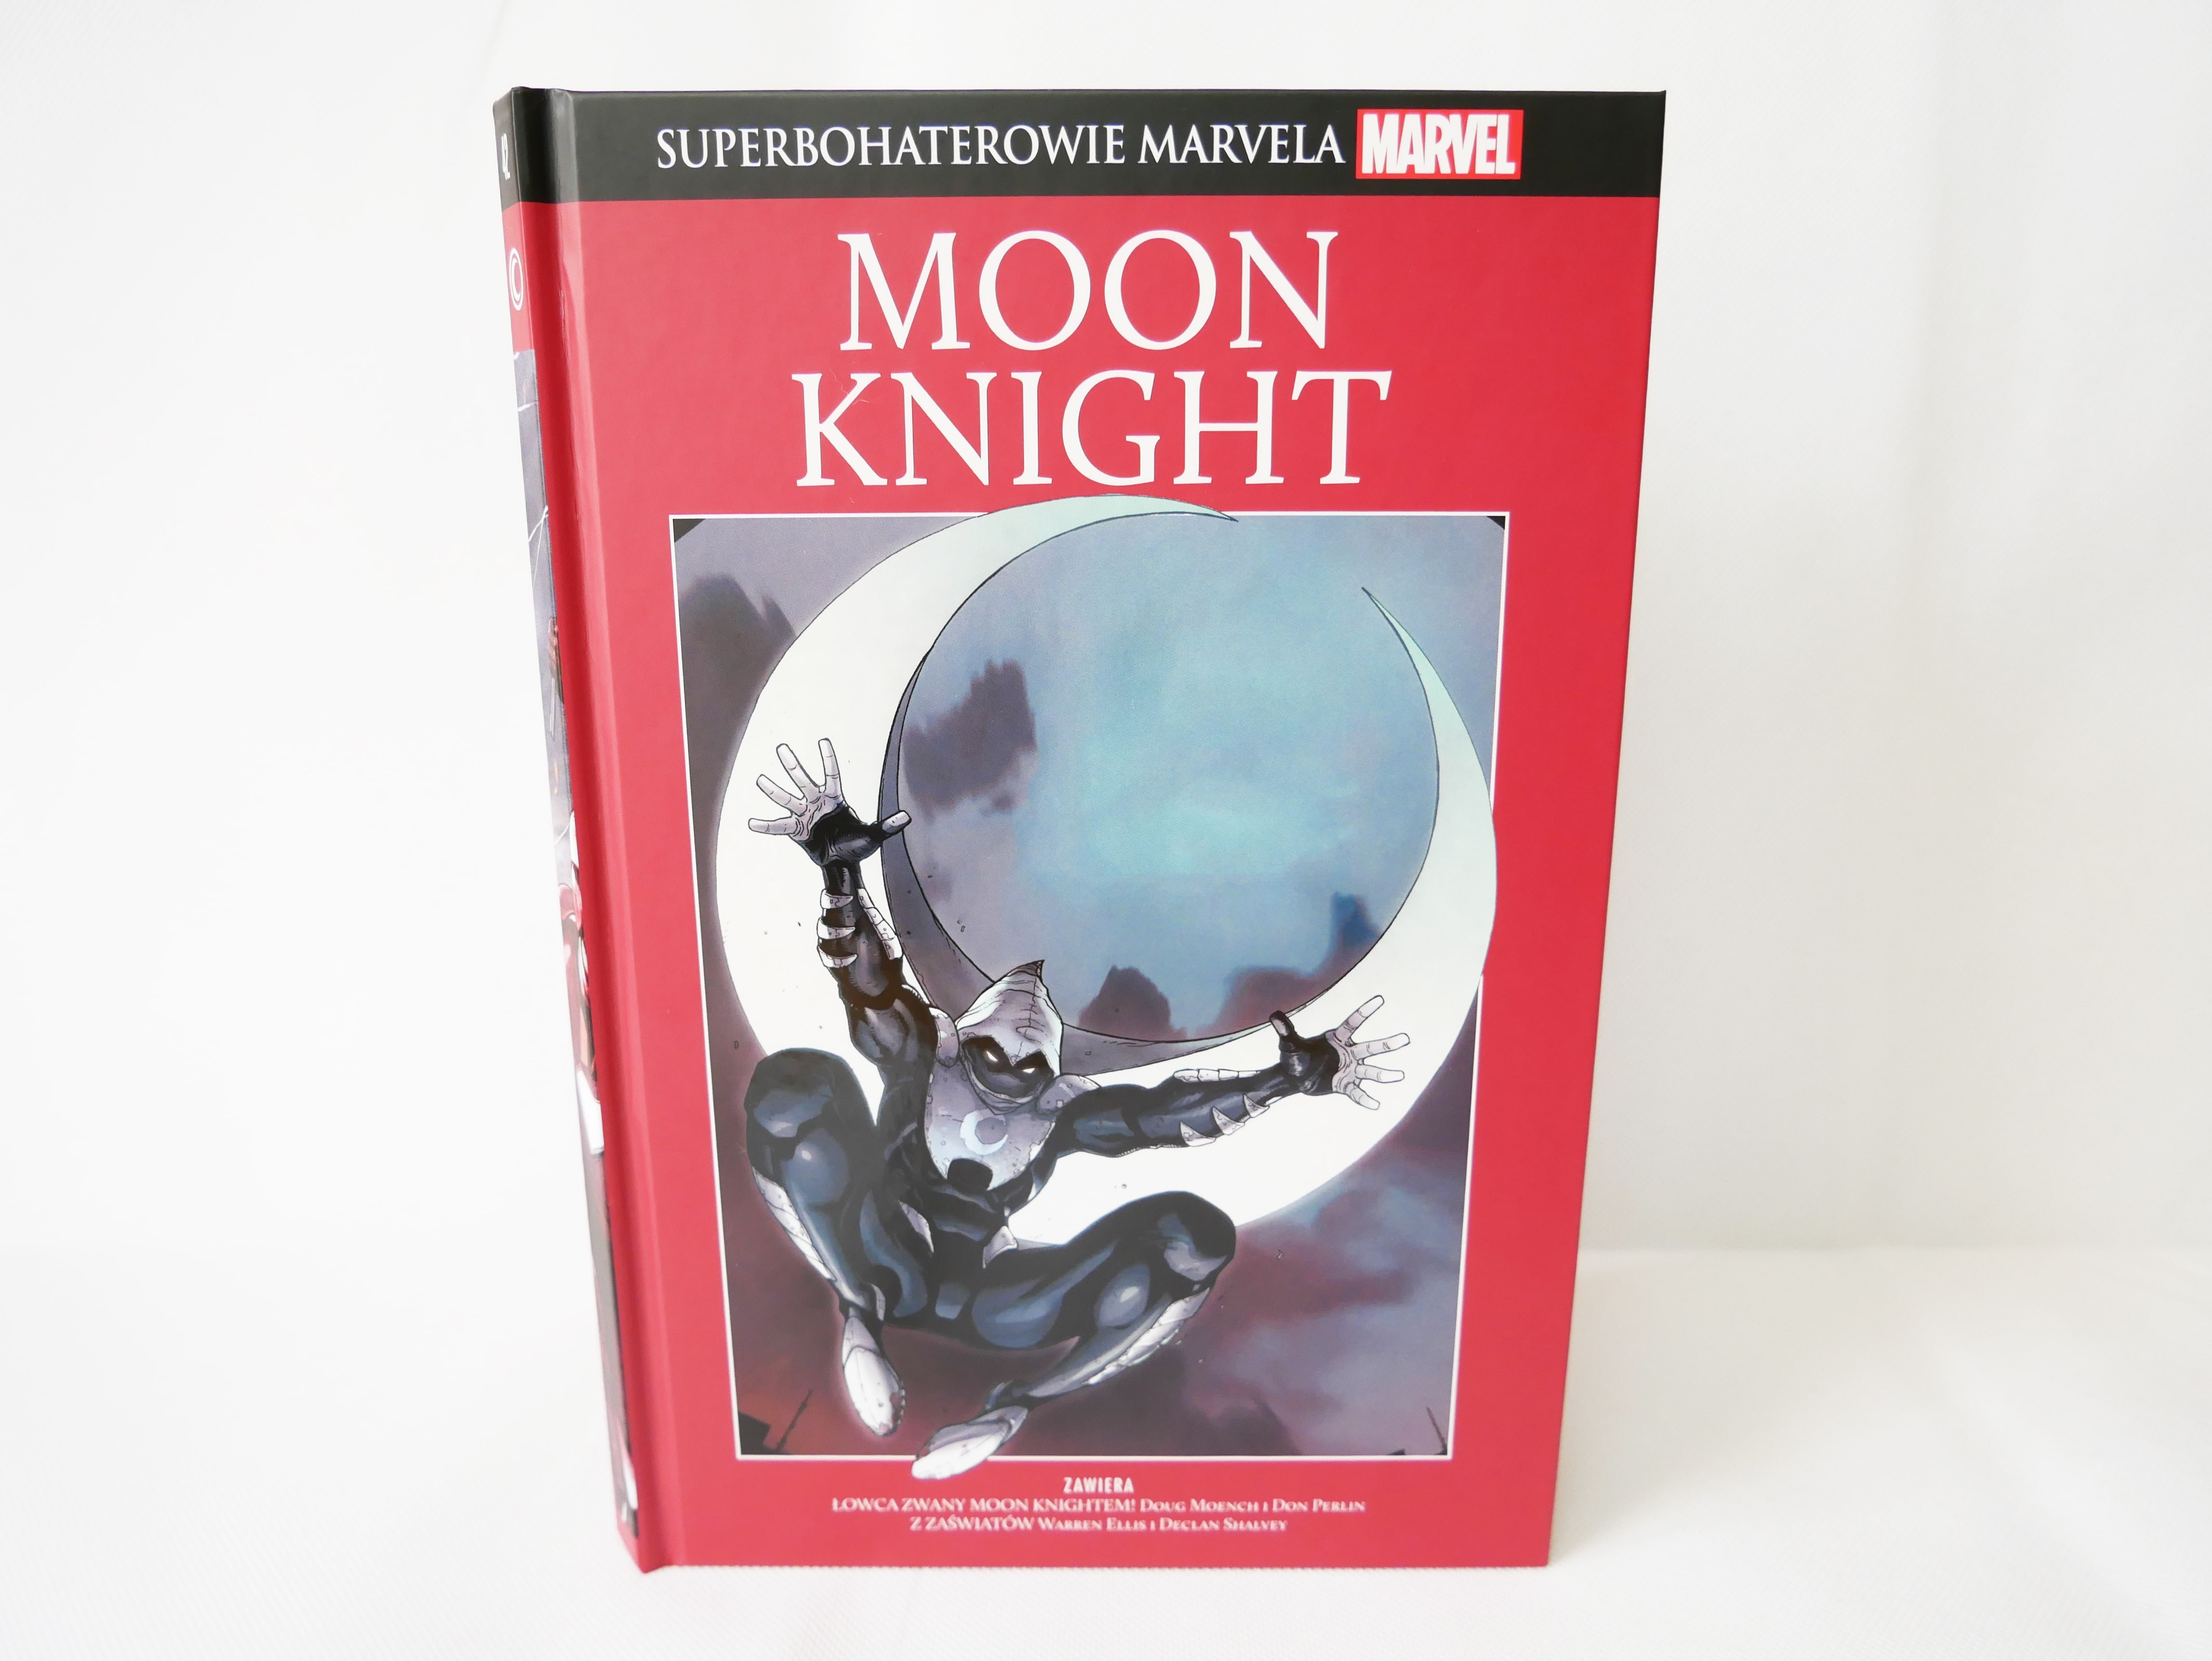 Superbohaterowie Marvela#42: Moon Knight